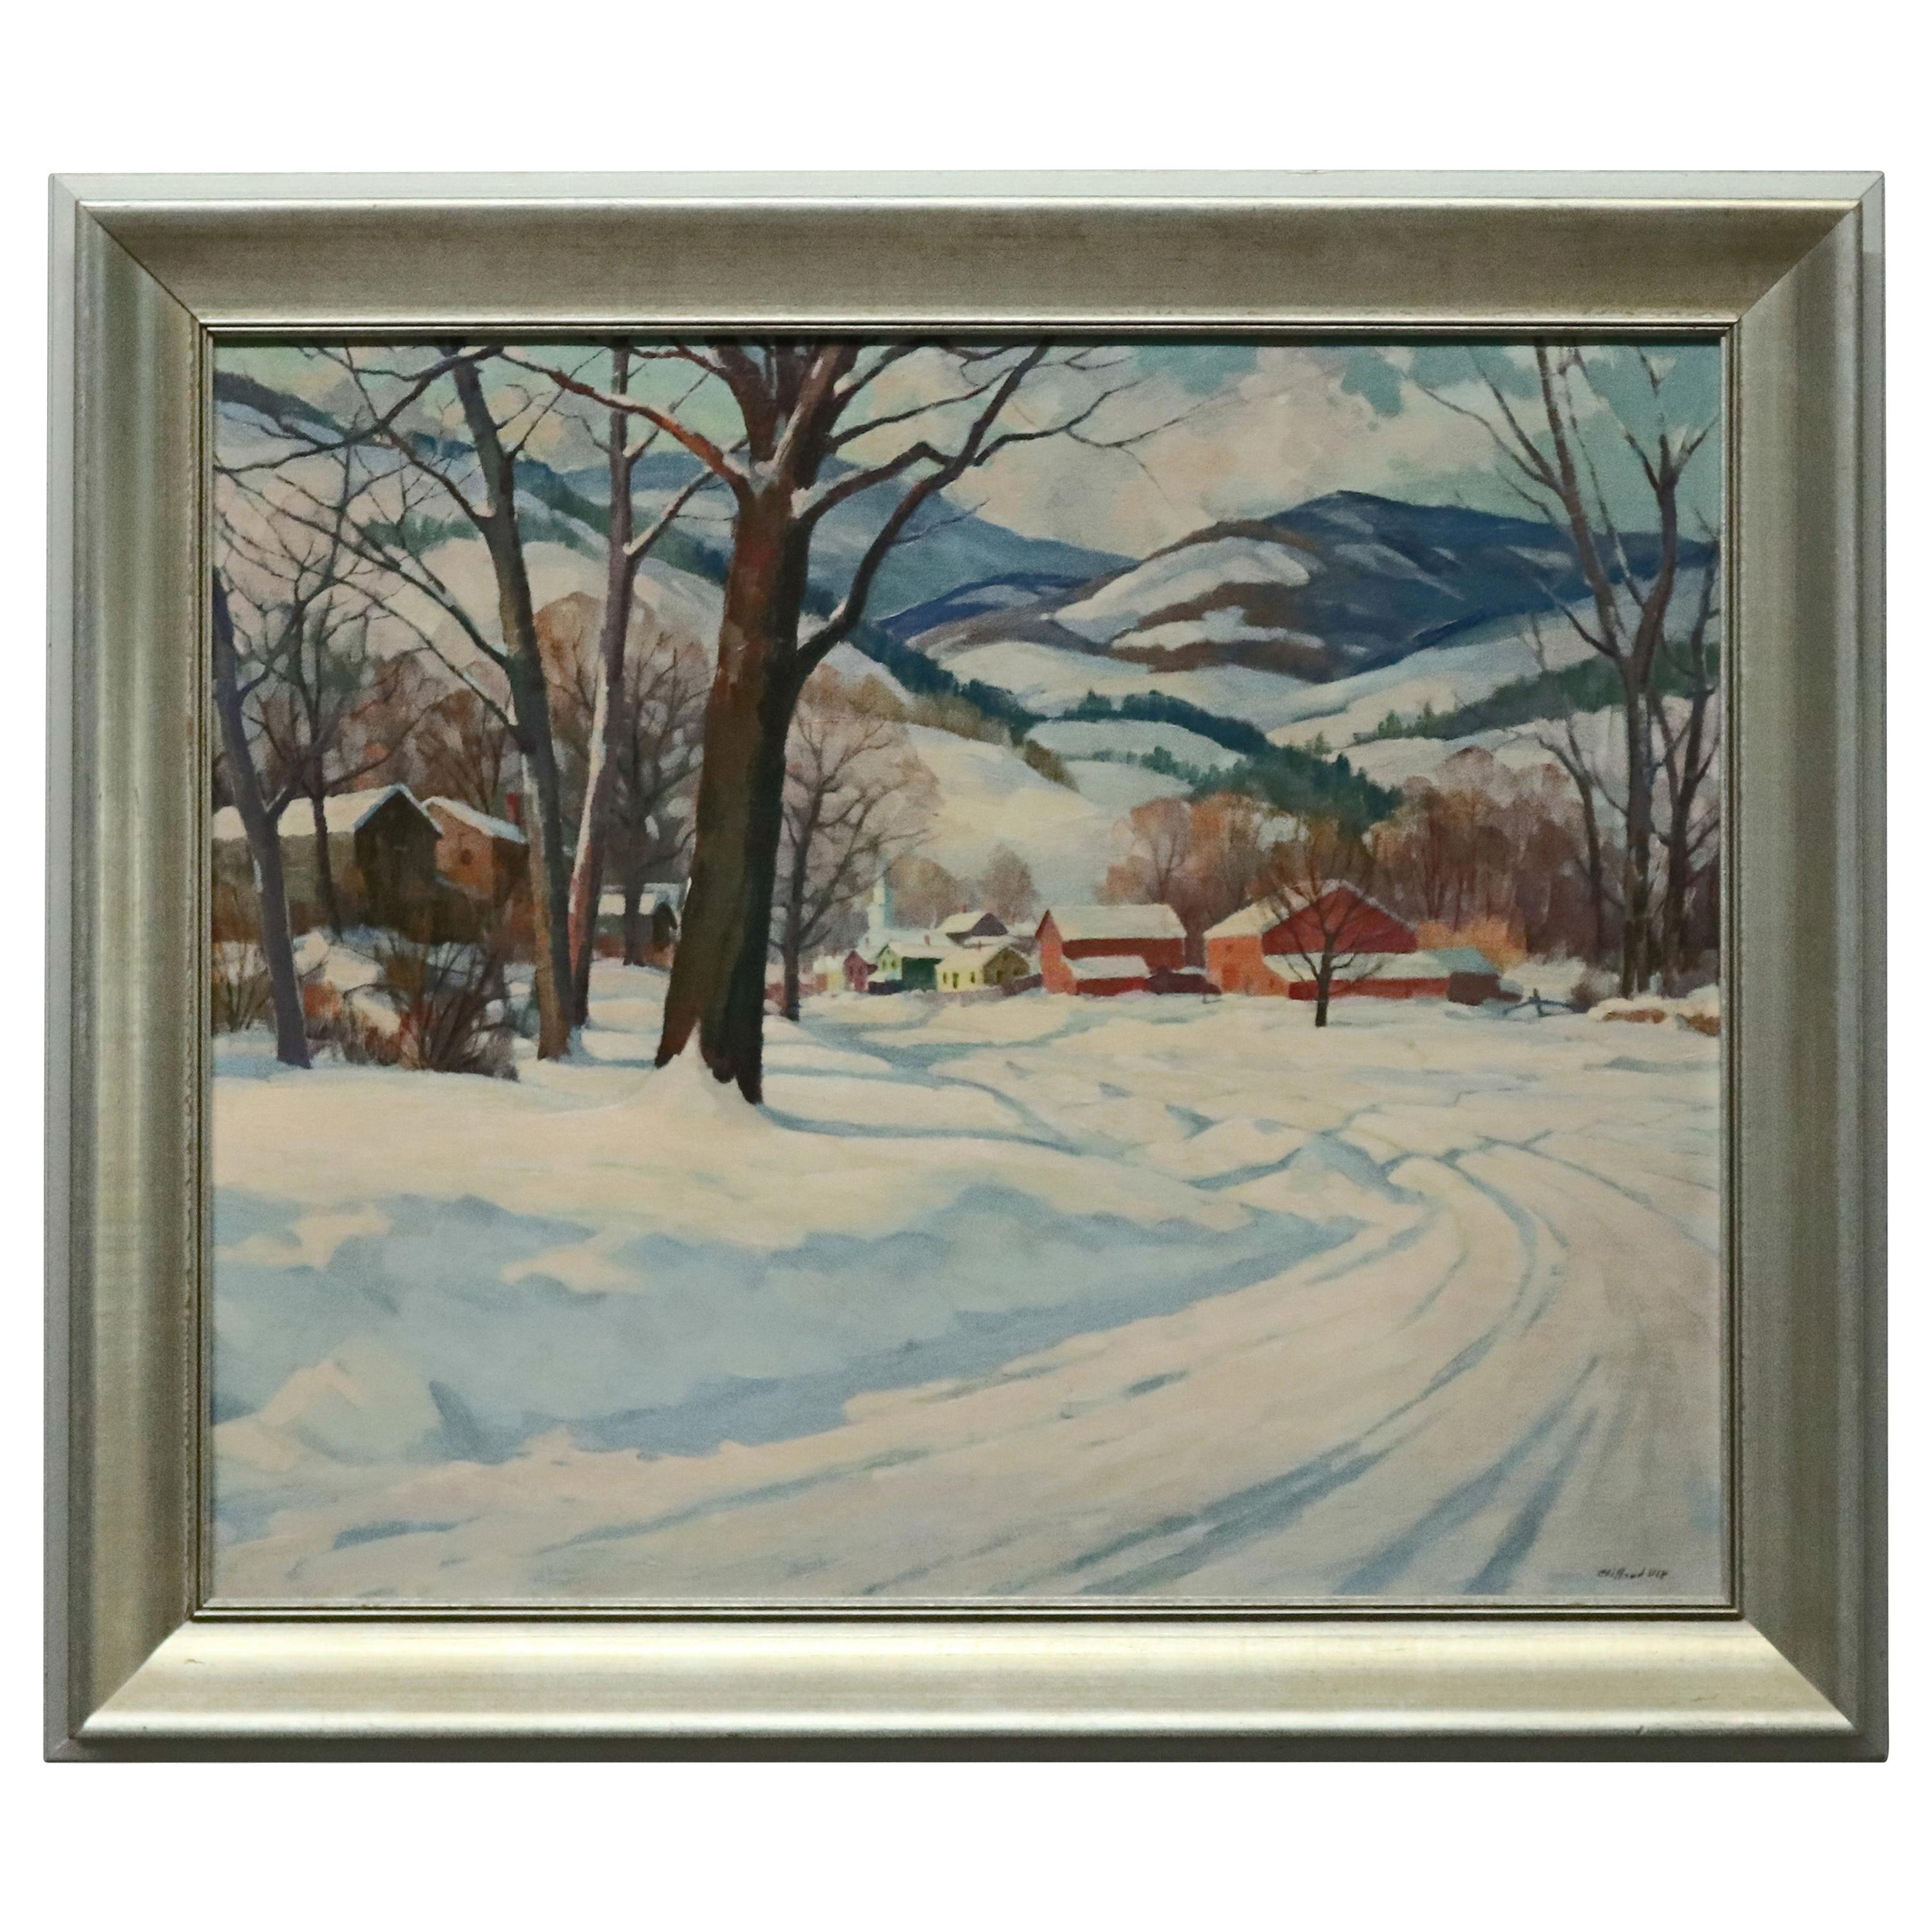 Clifford Ulp Oil on Canvas Landscape Painting, Winter Village Scene, circa 1940